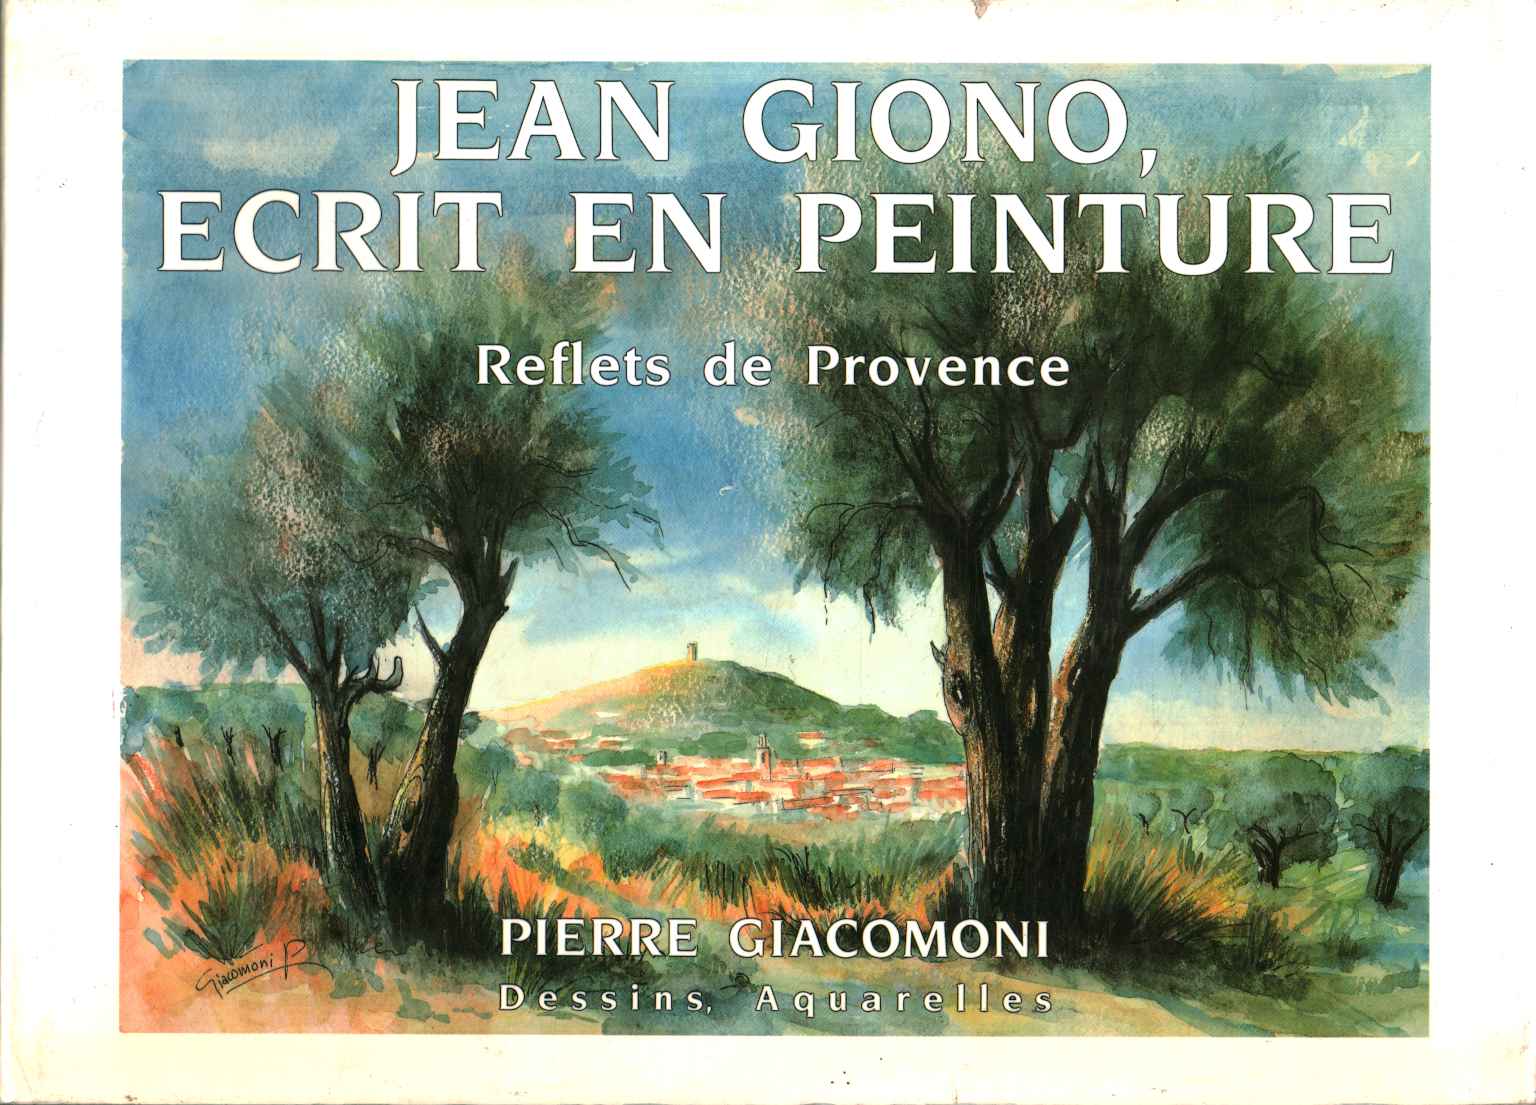 Jean Giono écrivait en peinture,Jean Giono écrivait en peinture,Jean Giono écrivait en peinture,Jean Giono écrivait en peinture,Jean Giono écrivait en peinture